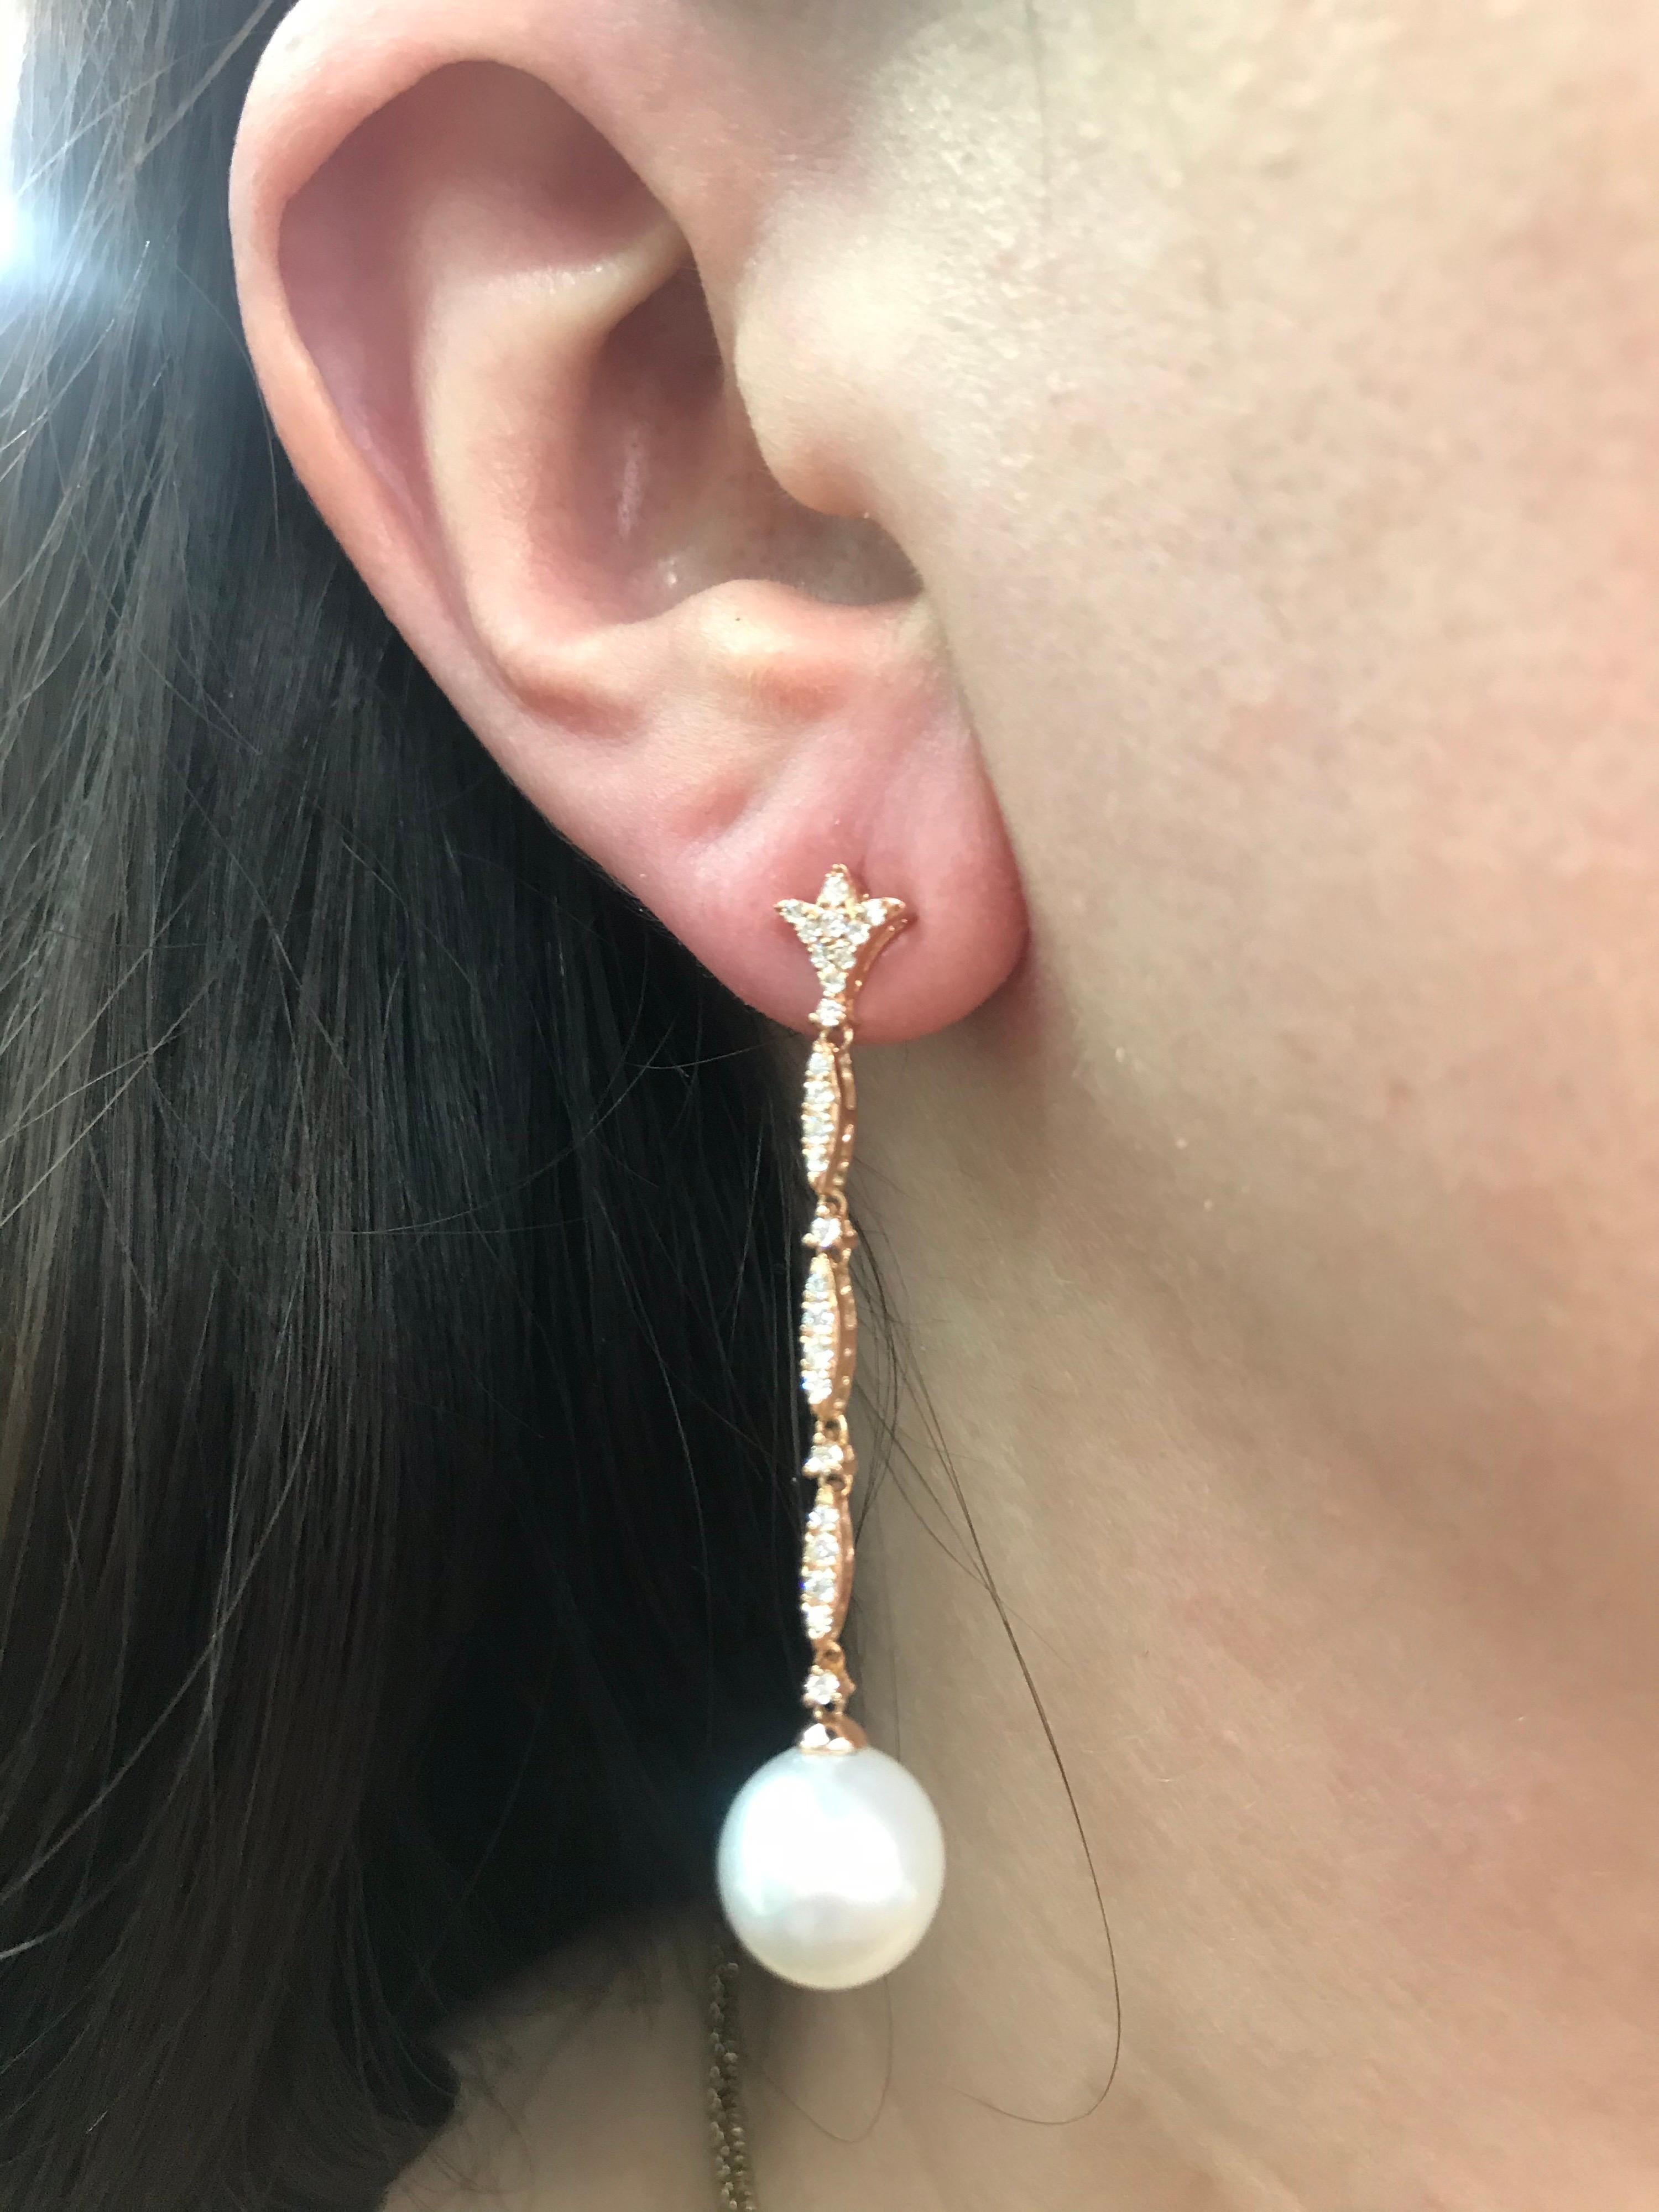 boucles d'oreilles pendantes en or rose 18 carats avec 40 brillants ronds pesant 0.42 carats et deux perles des mers du Sud mesurant 10-11 mm. 